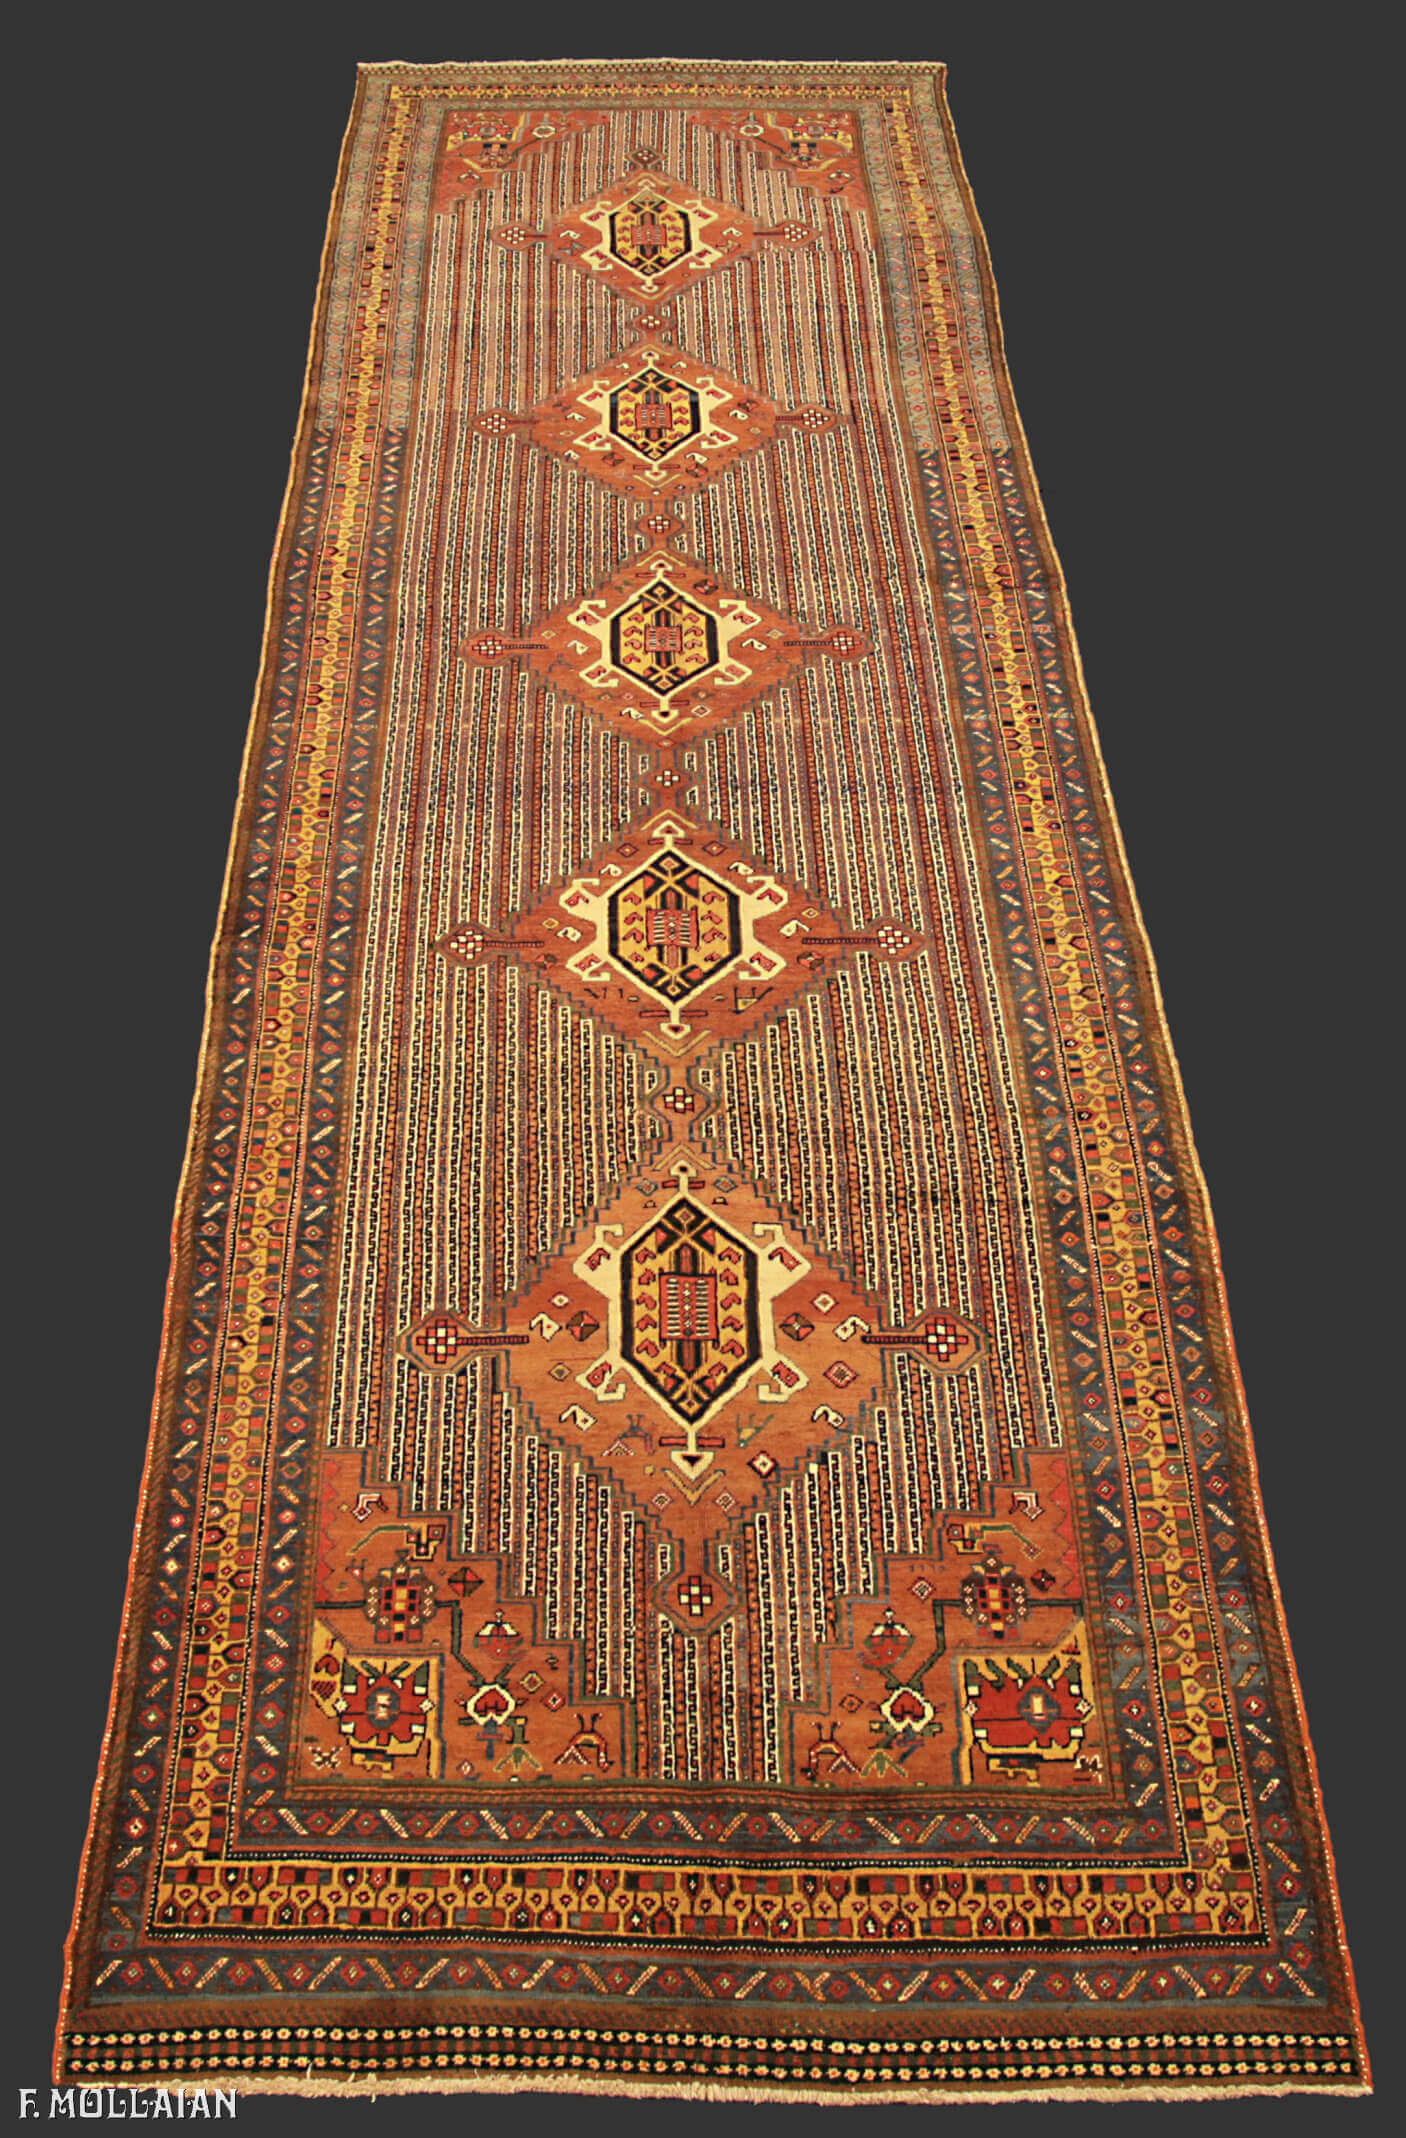 Teppich Antiker North West Persia n°:46484314